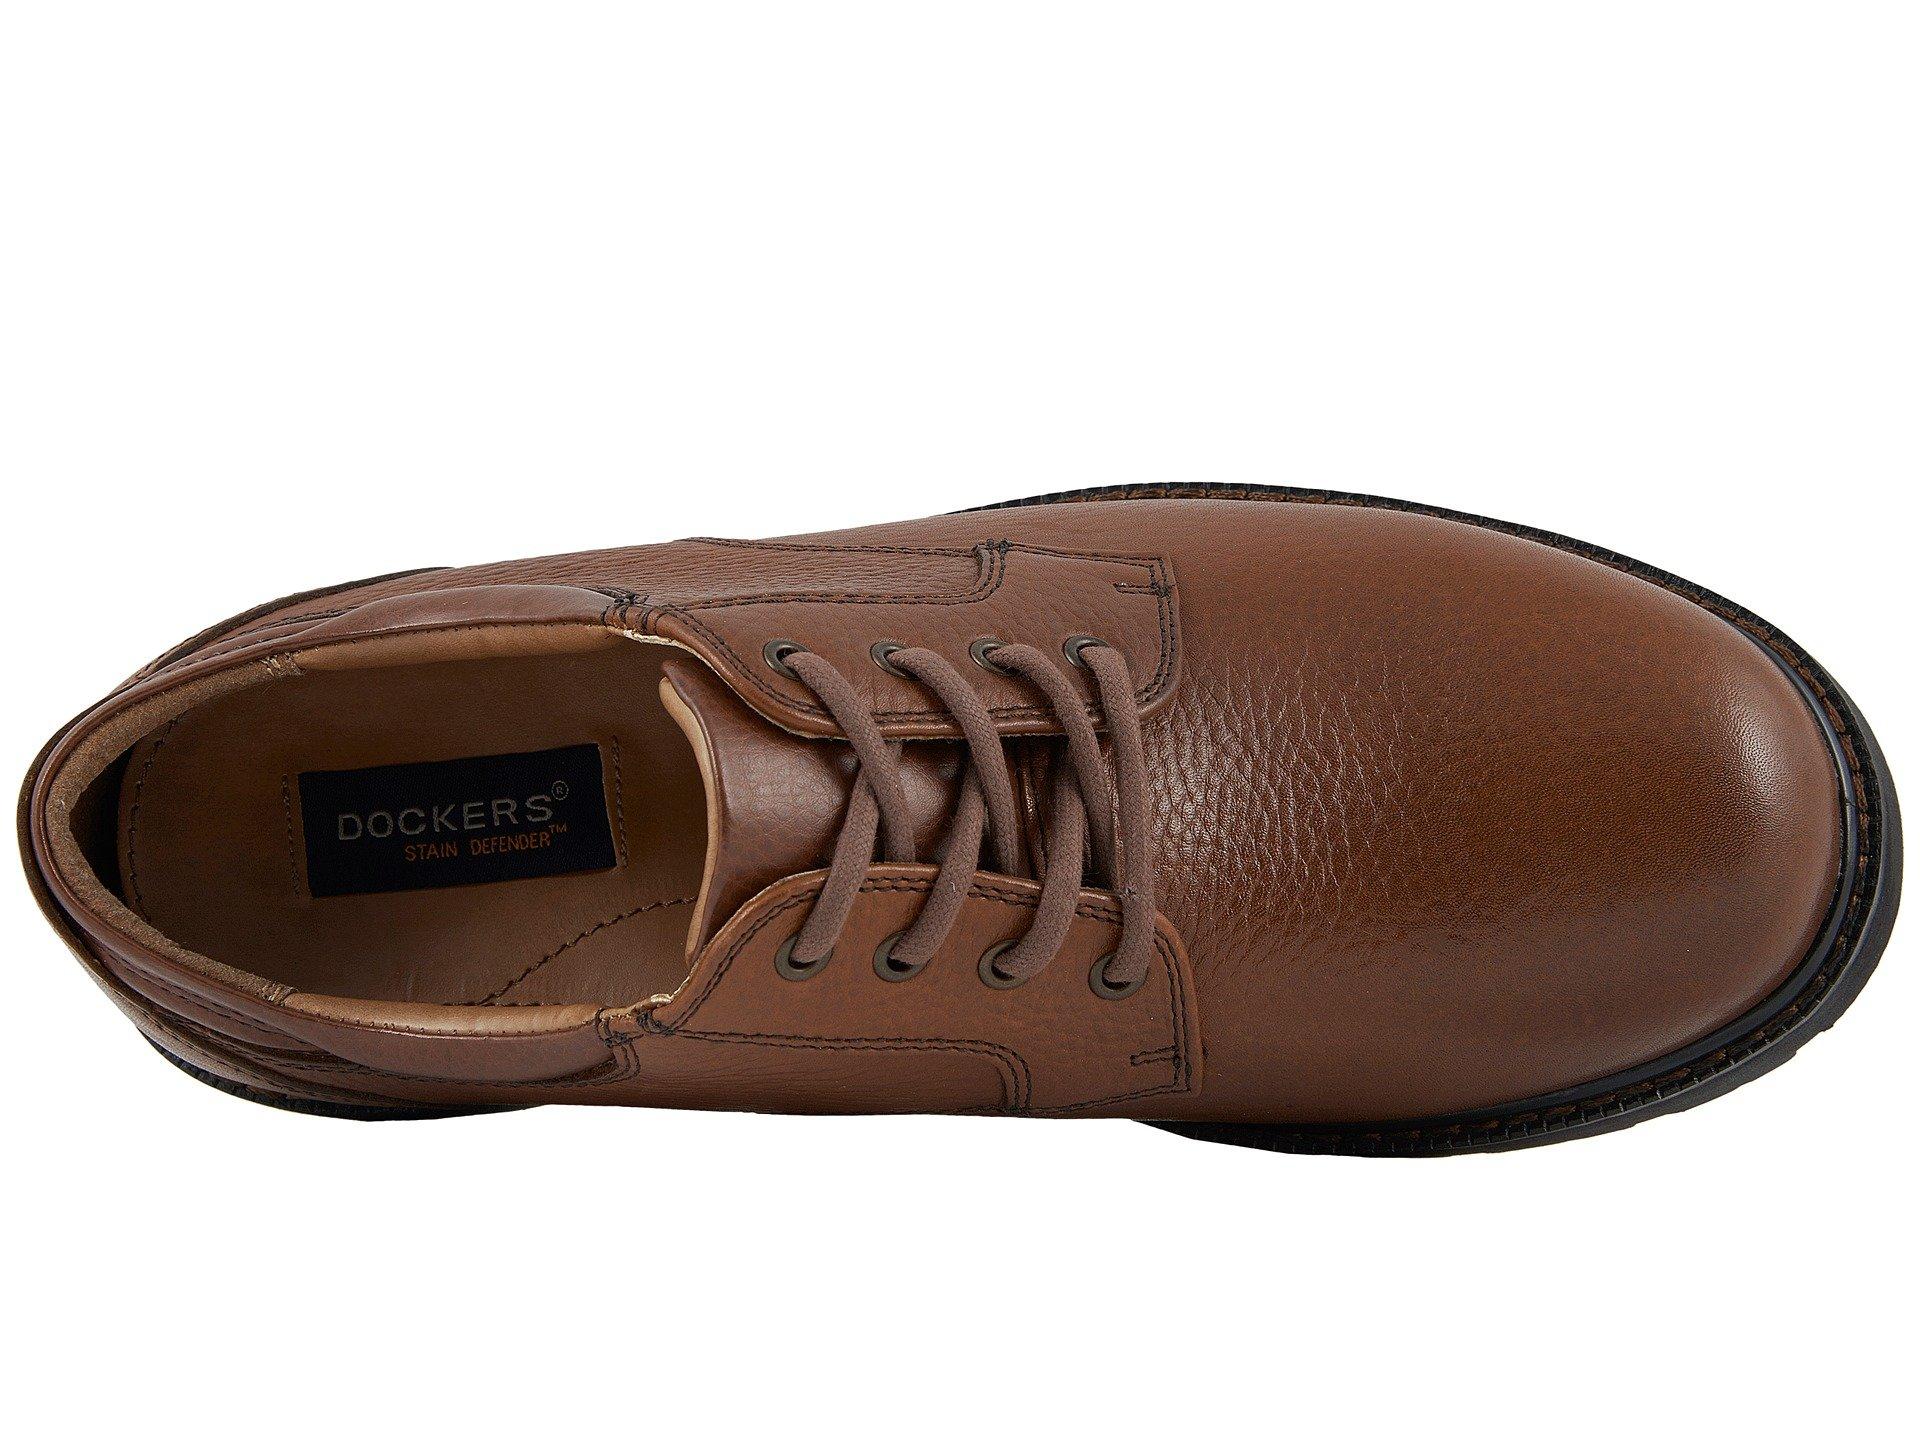 Dockers Men's Leather Sandhurst Light Tan Shelter Plain Toe Oxfords Shoes 8.5 M 